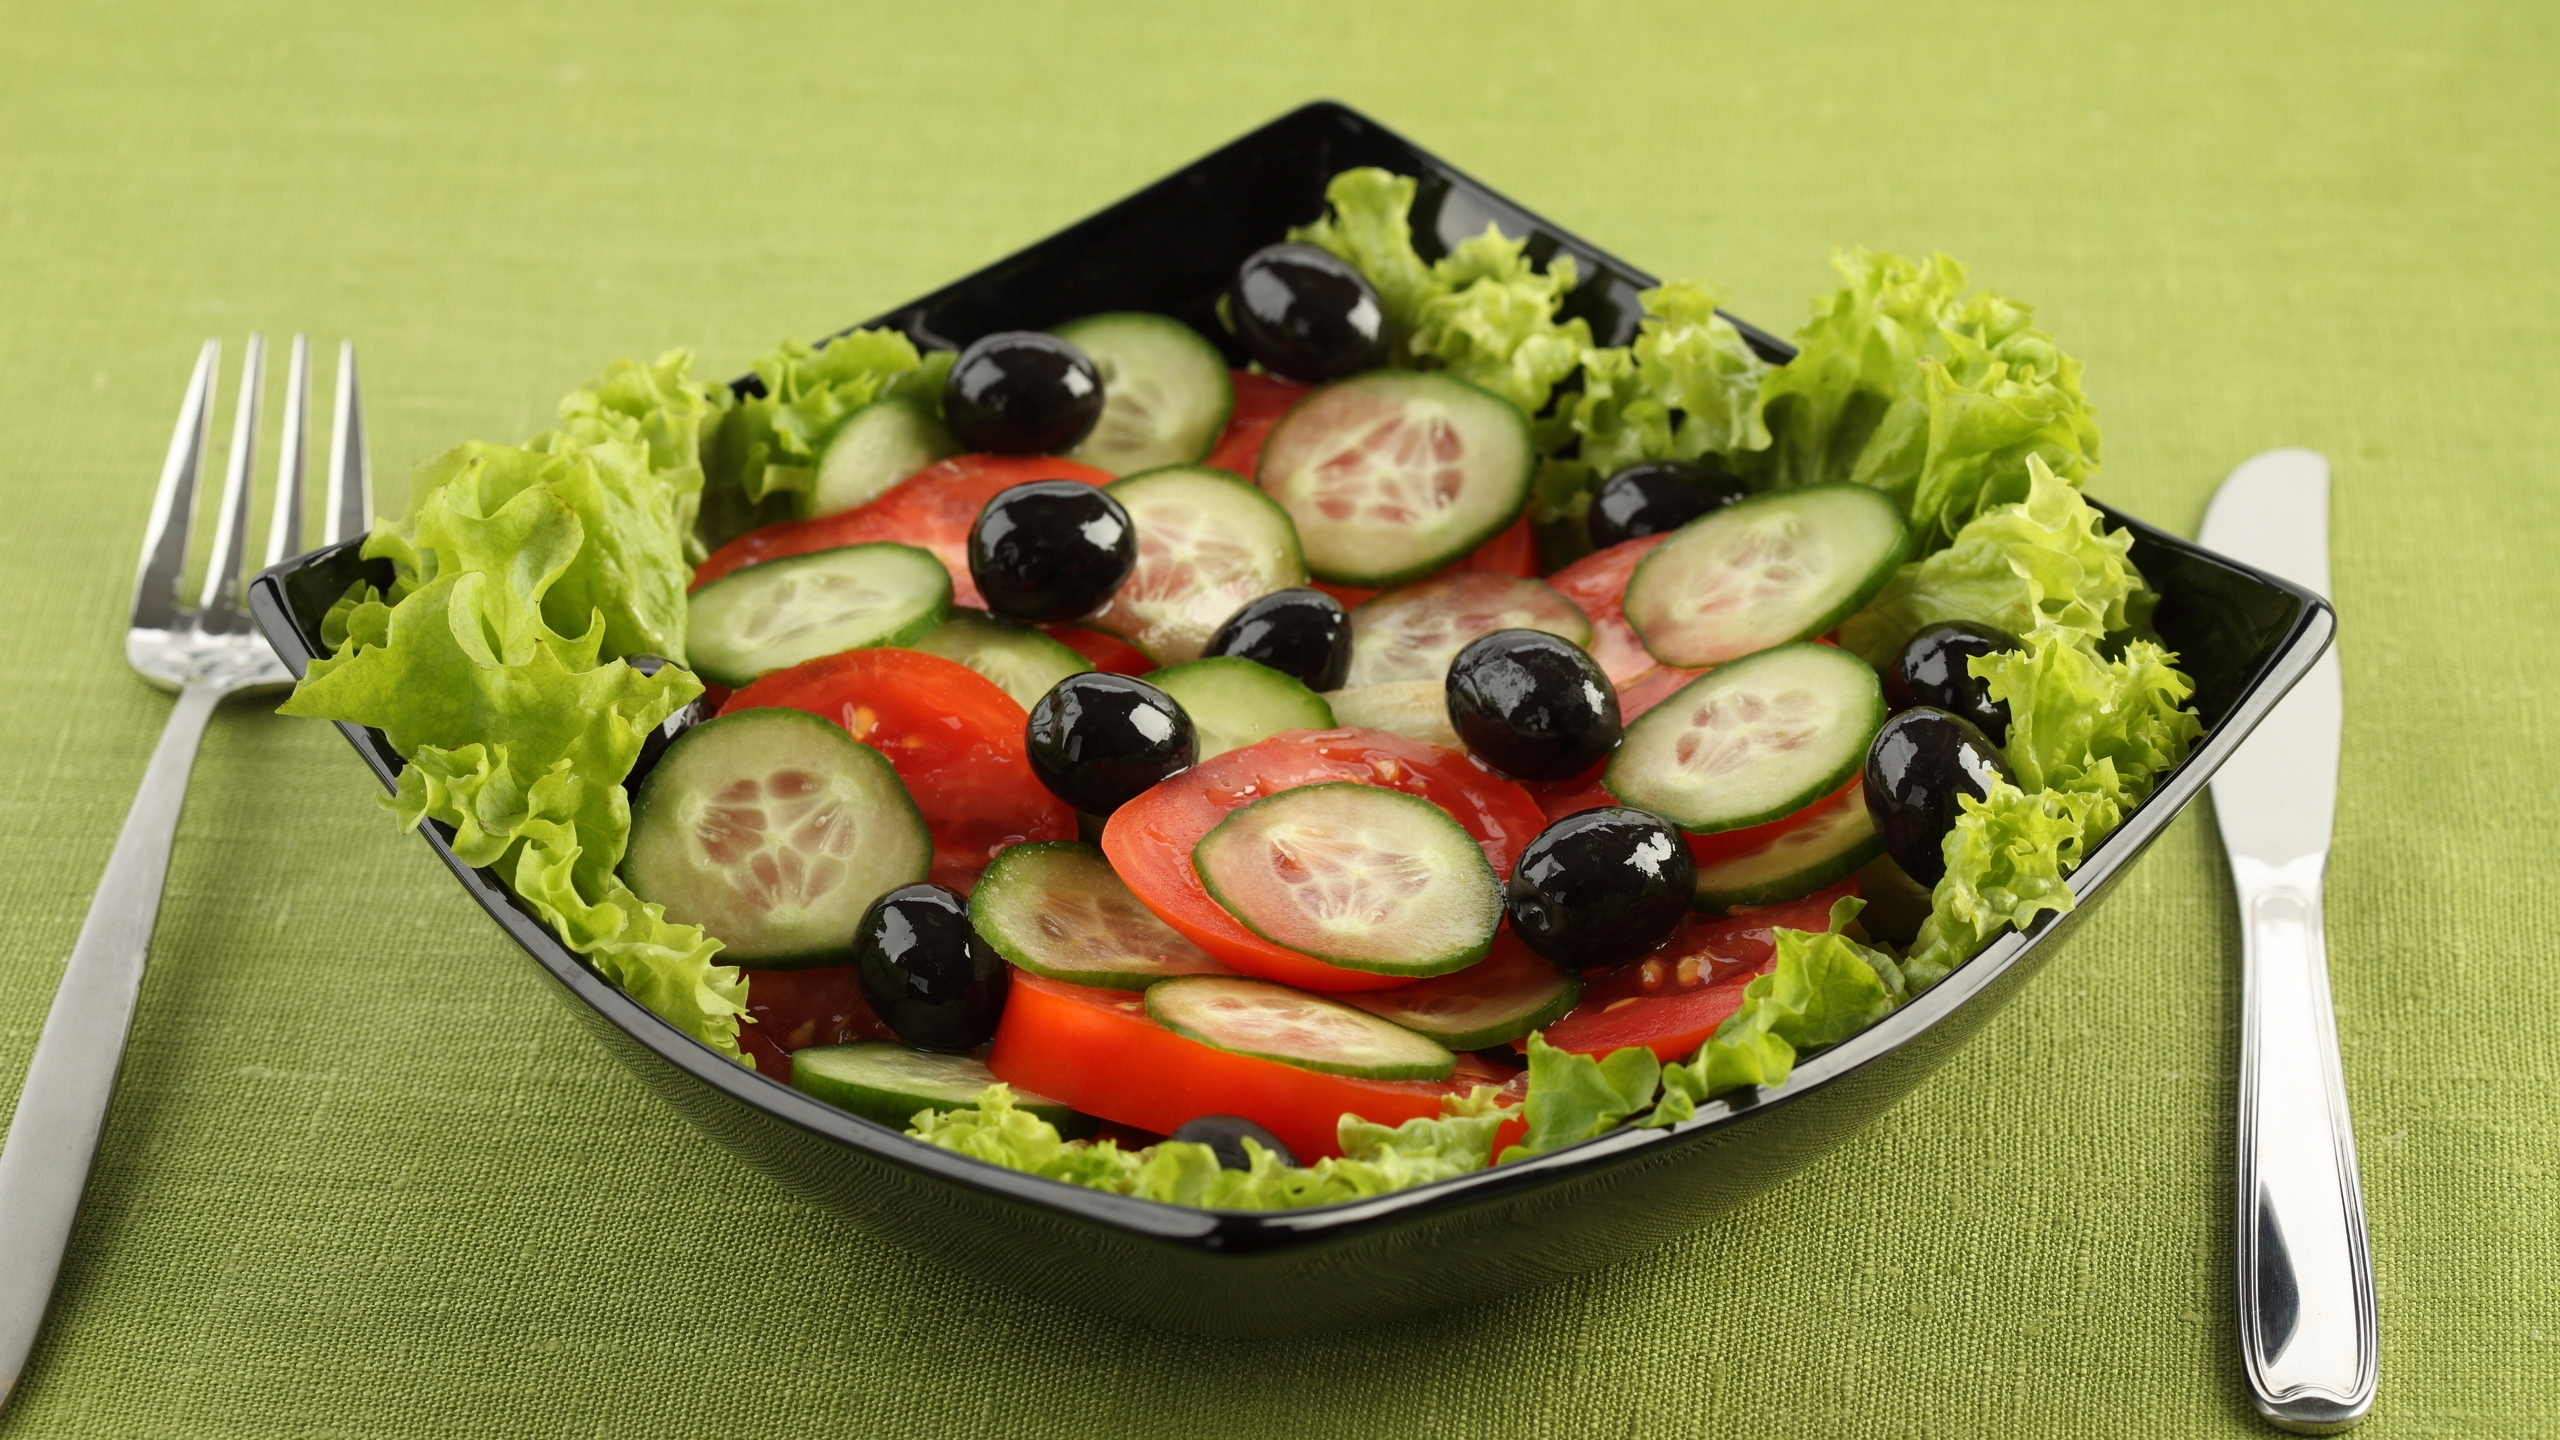 Summer Healthy Salad for 2560x1440 HDTV resolution